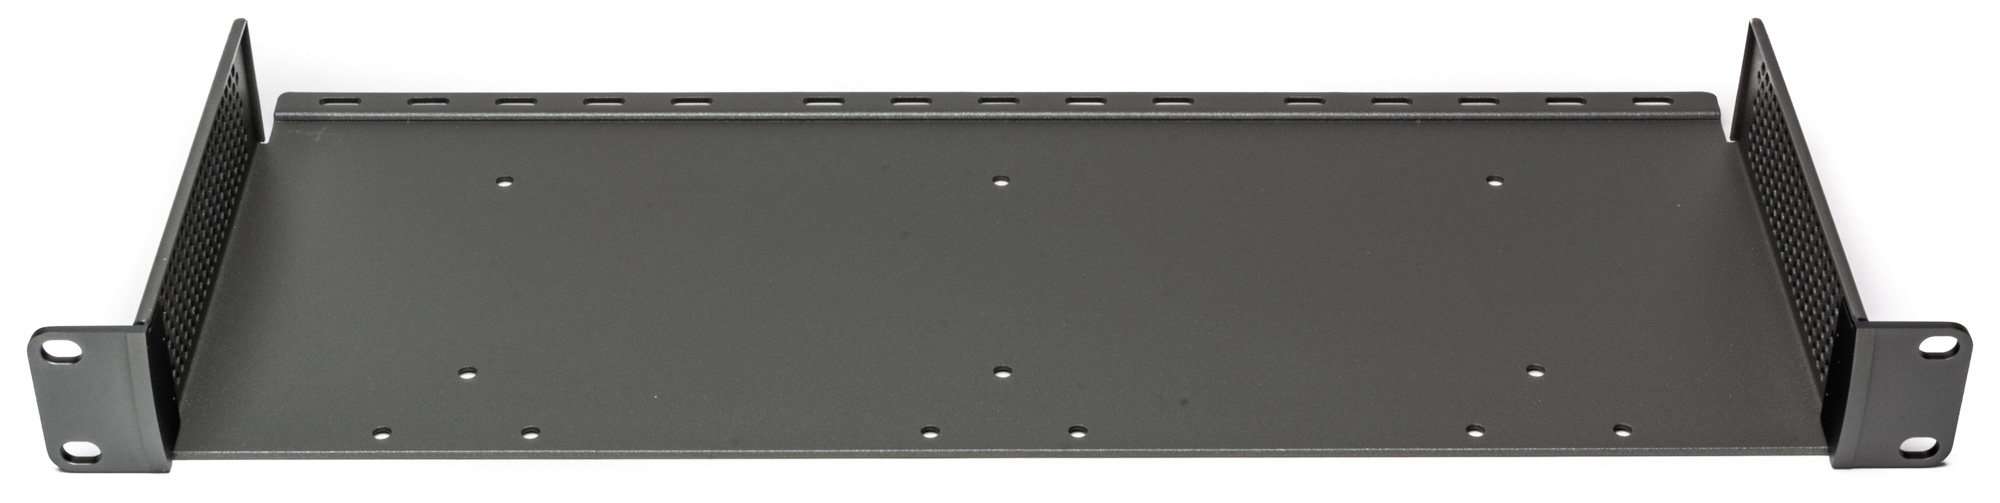 Blackmagic BMD-CONVNTRM/YA/RSH Teranex Mini - Rack Shelf - B-Stock 